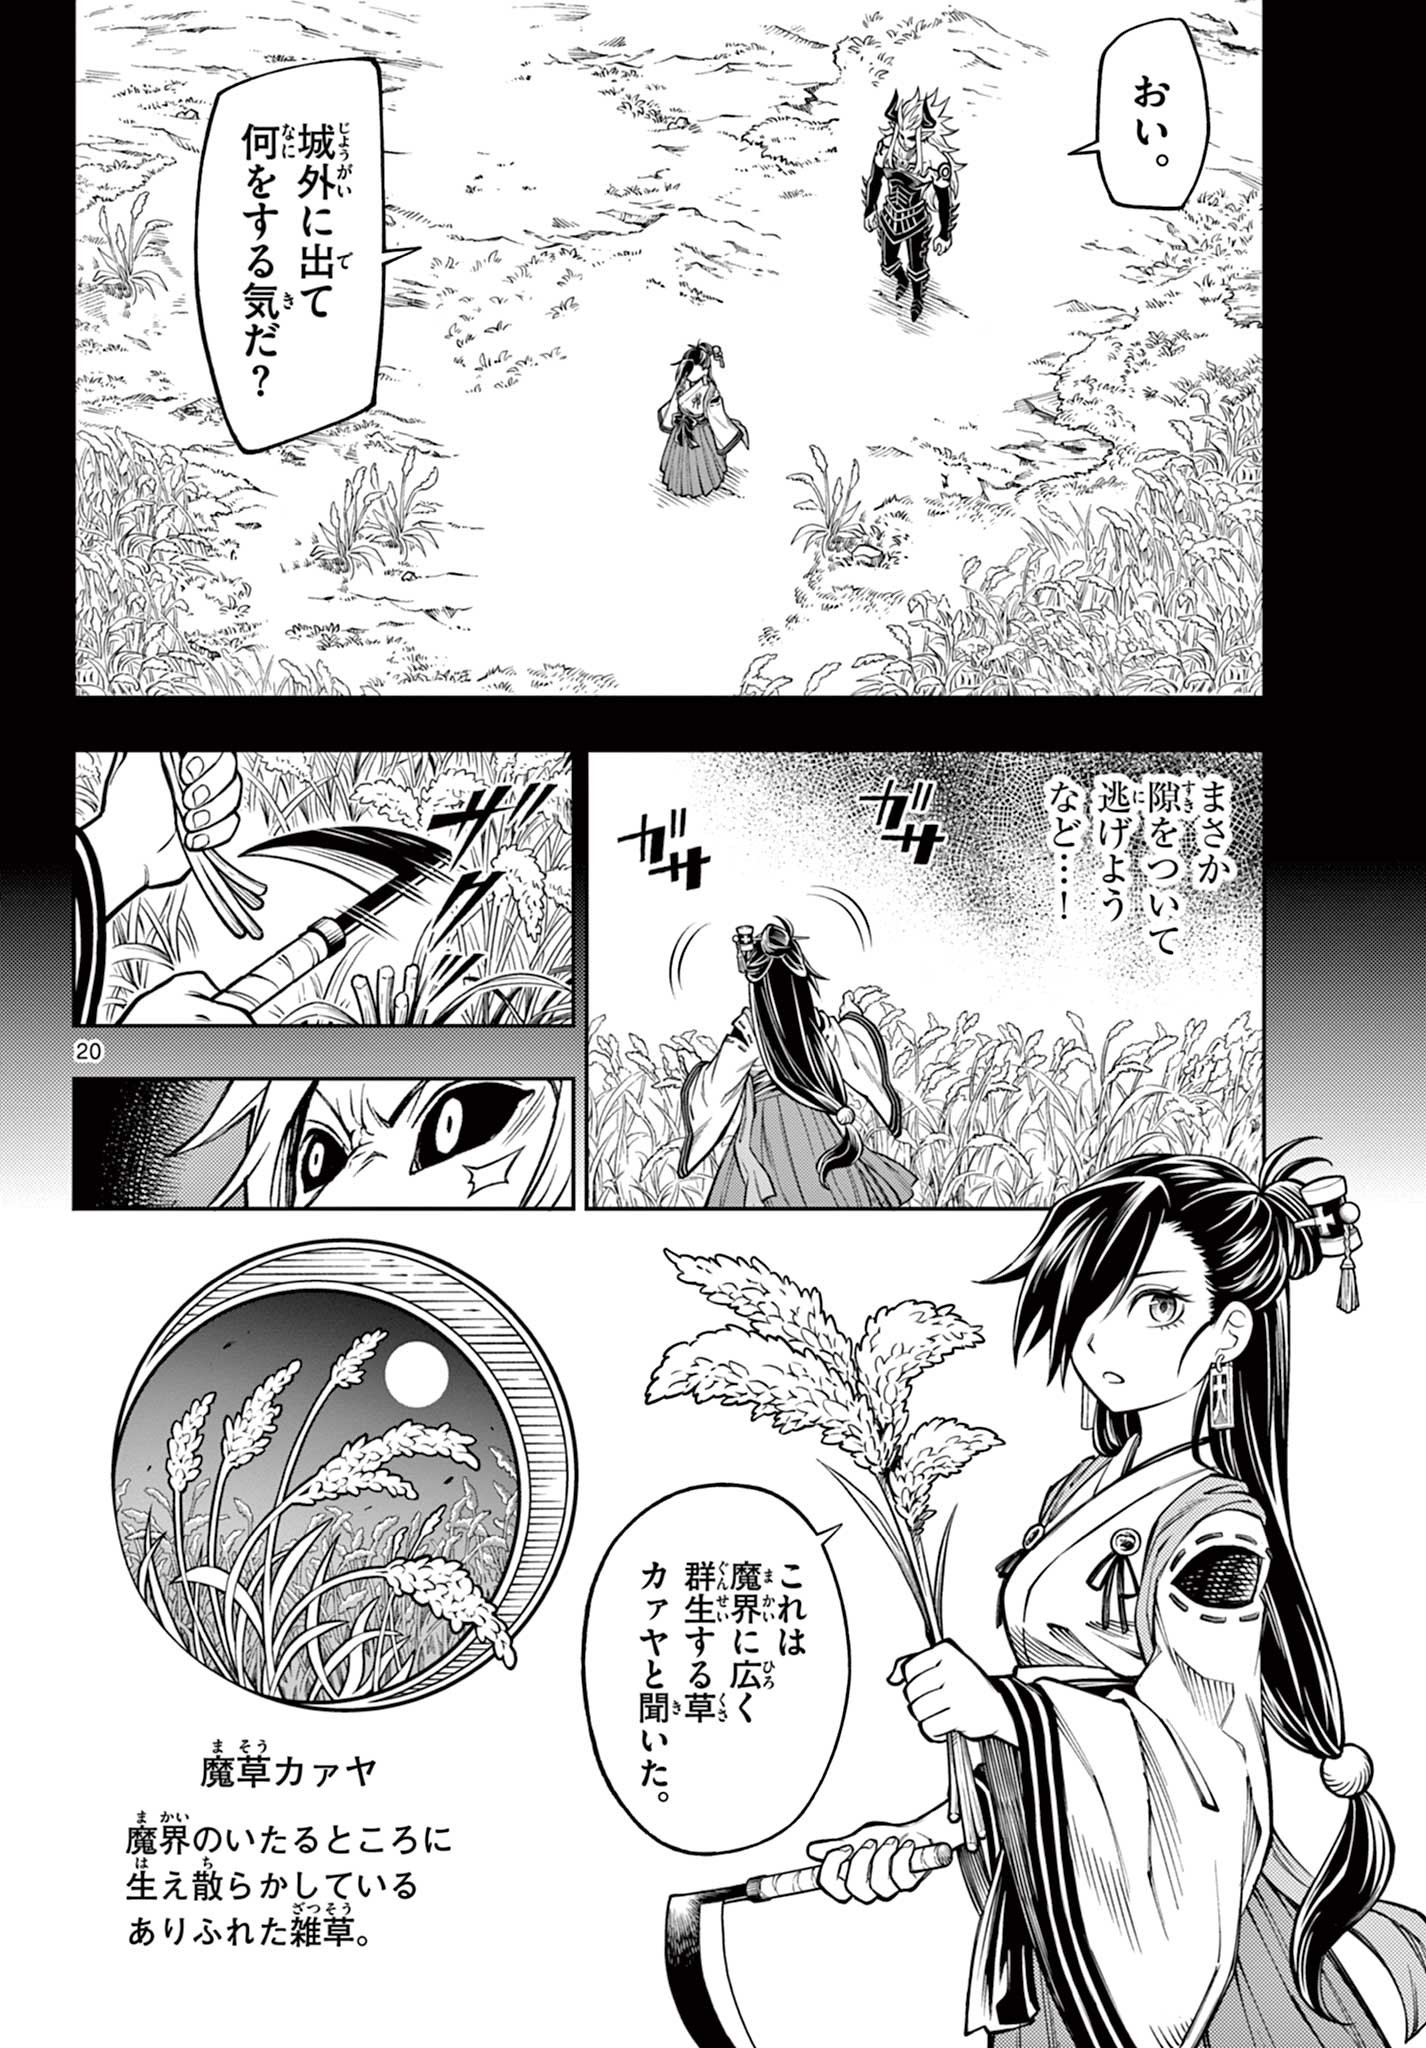 Soara to Mamono no ie - Chapter 10.1 - Page 20